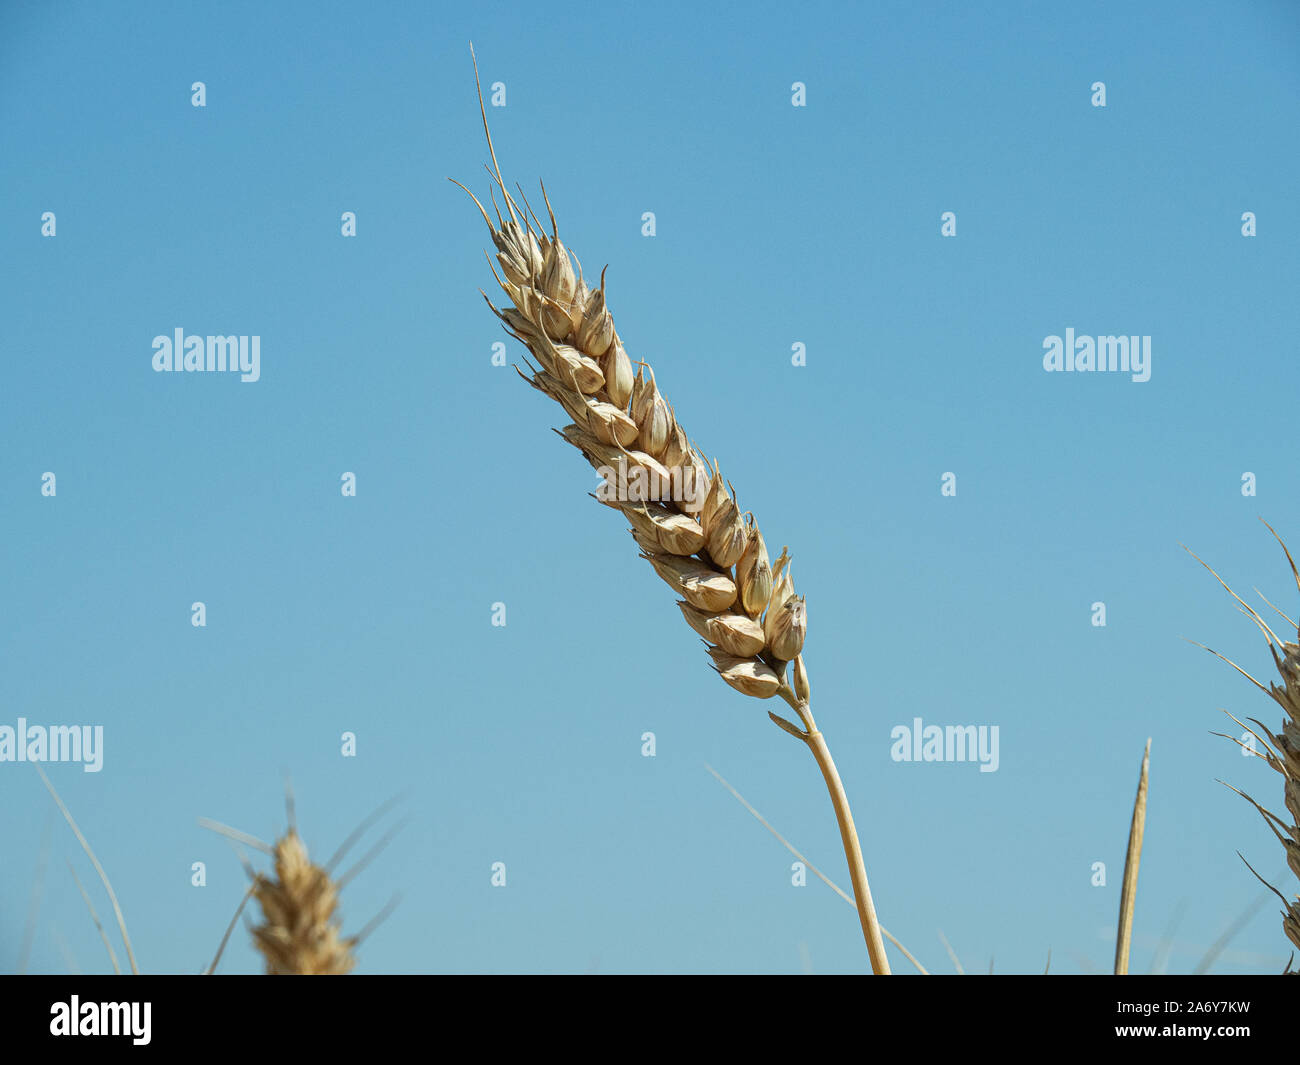 A close up of a single ripe wheat ear against a blue sky Stock Photo